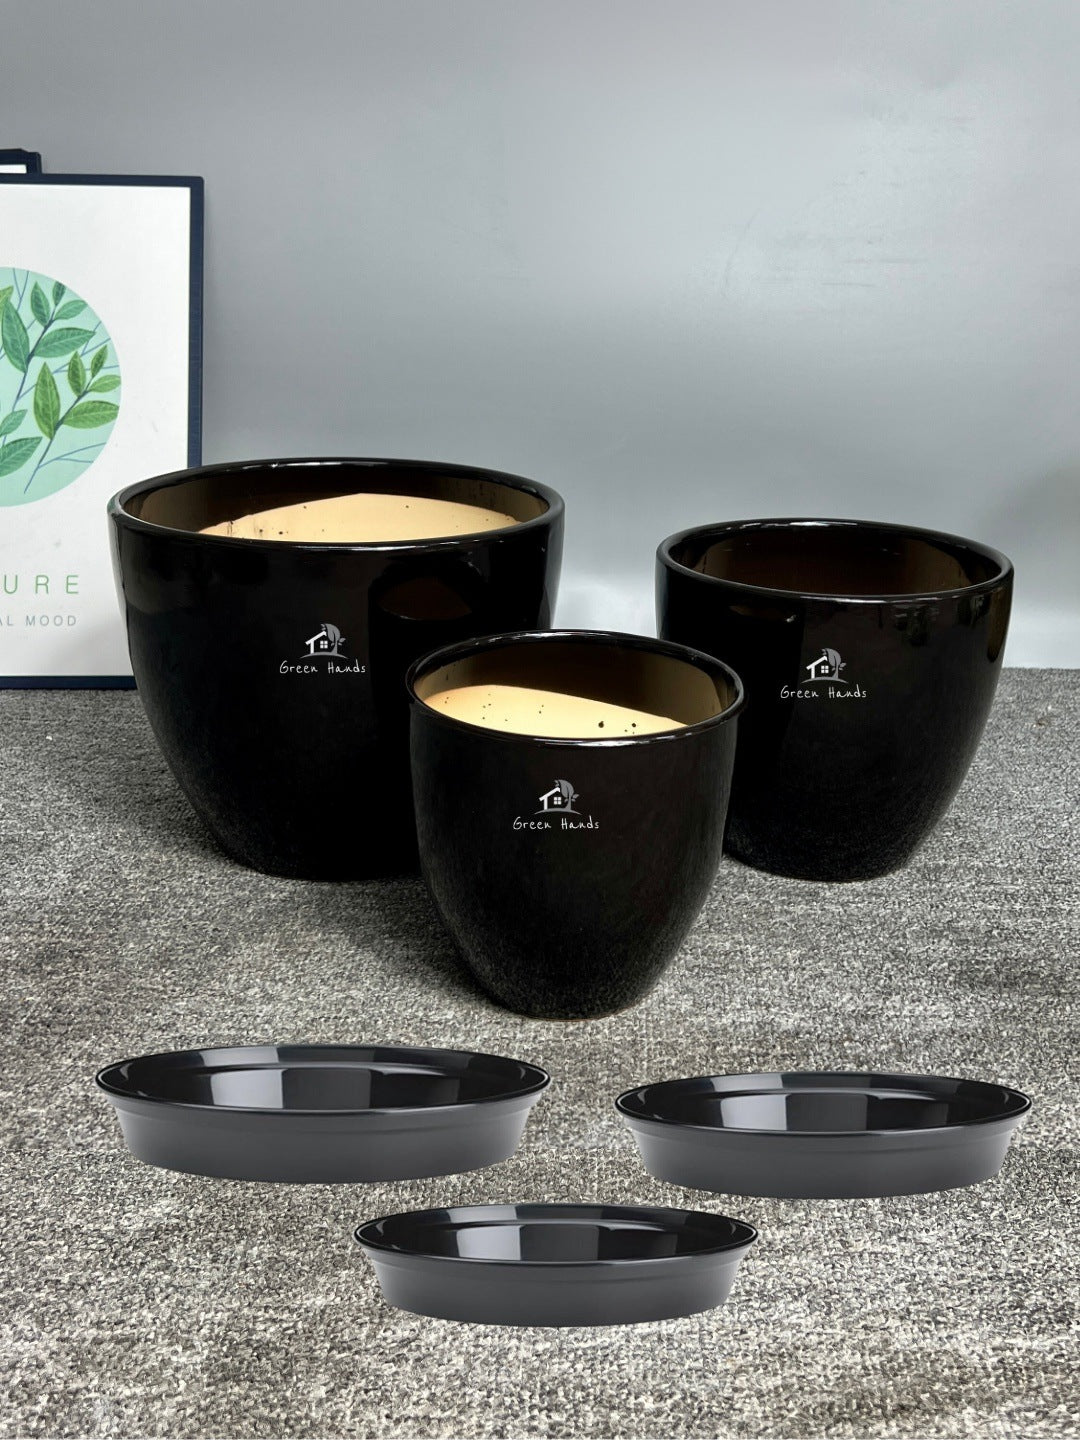 Sleek Black Ceramic Pots in Dubai & Abu Dhabi: Minimalistic Modern Design with Drain Holes with base plates